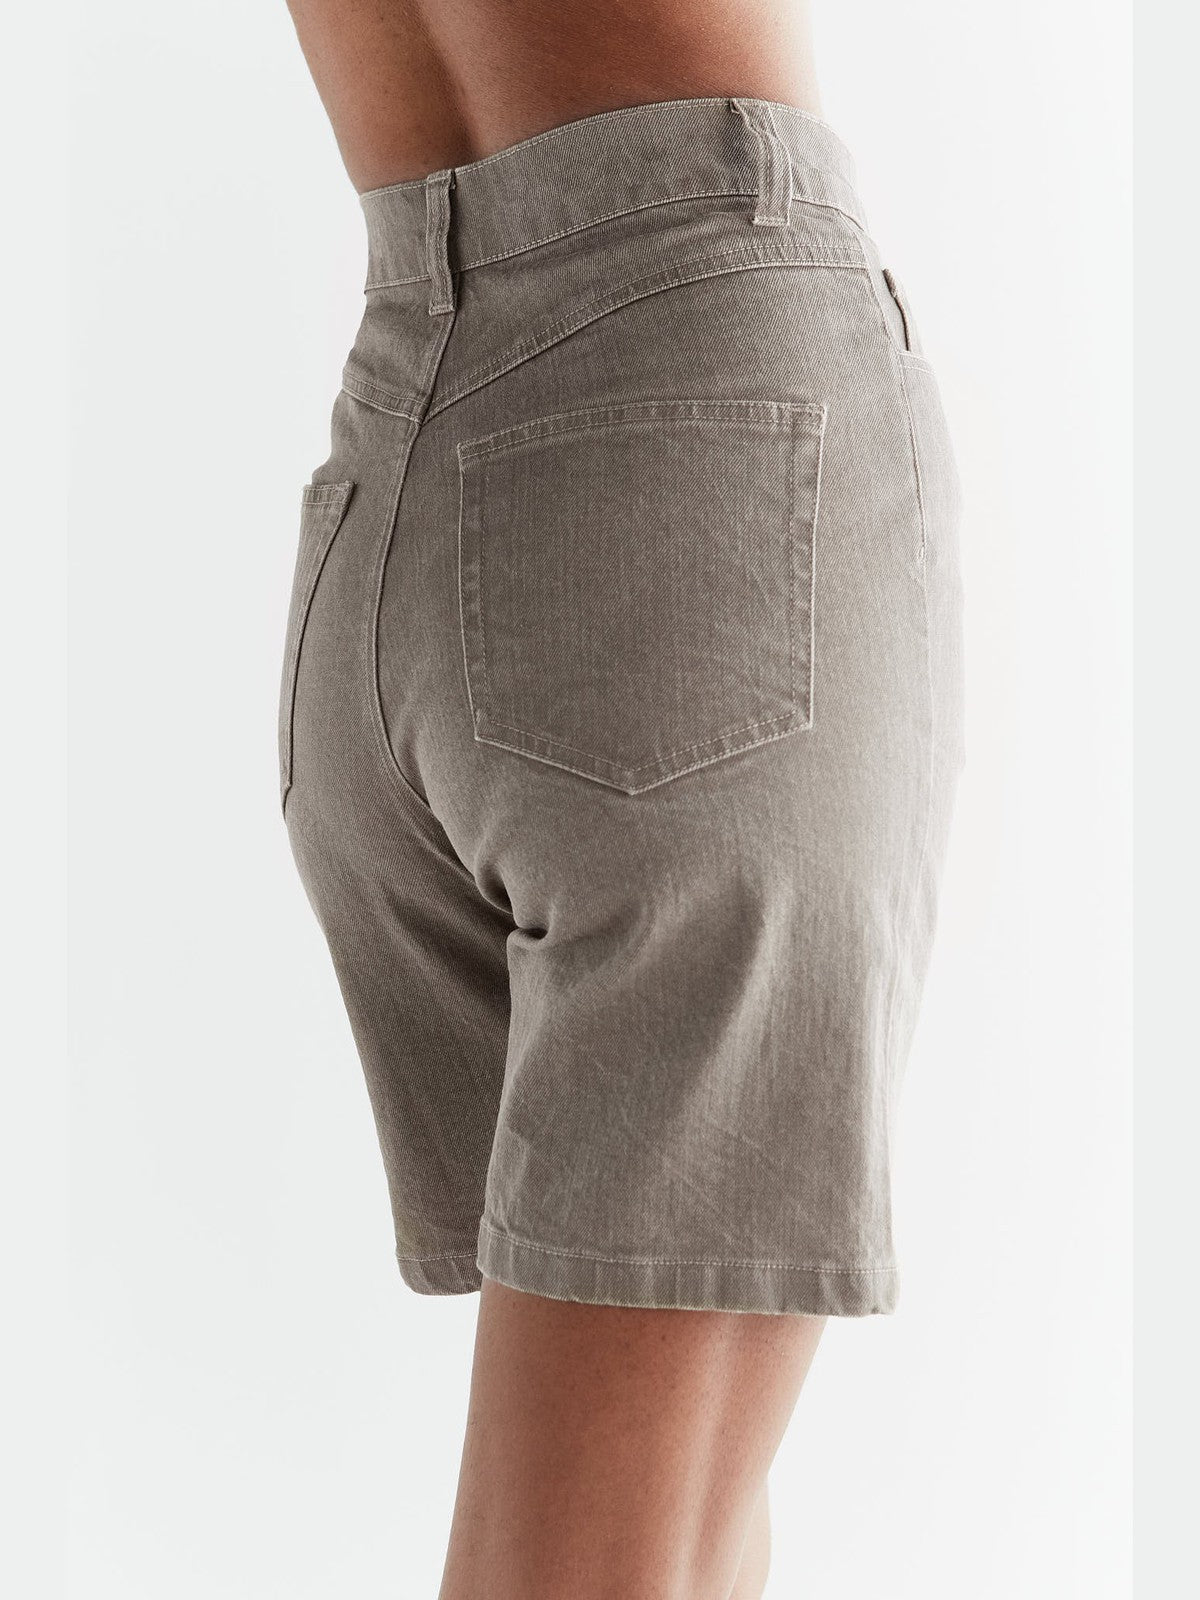 WA3018-395 | Damen Denim Shorts in Ton Waschung - Pebble